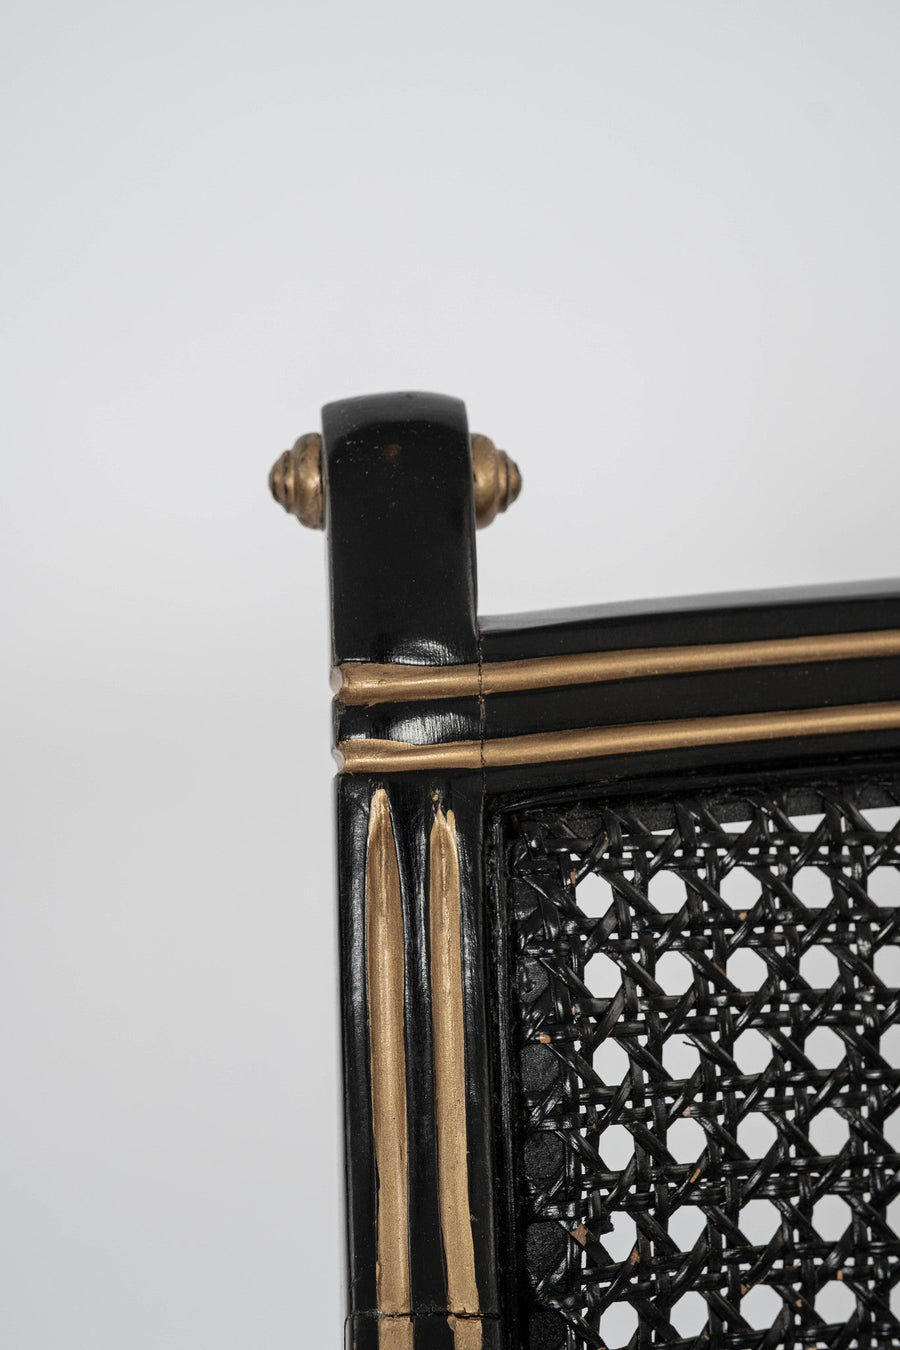 Pair Regency Style Black Gold Armchairs